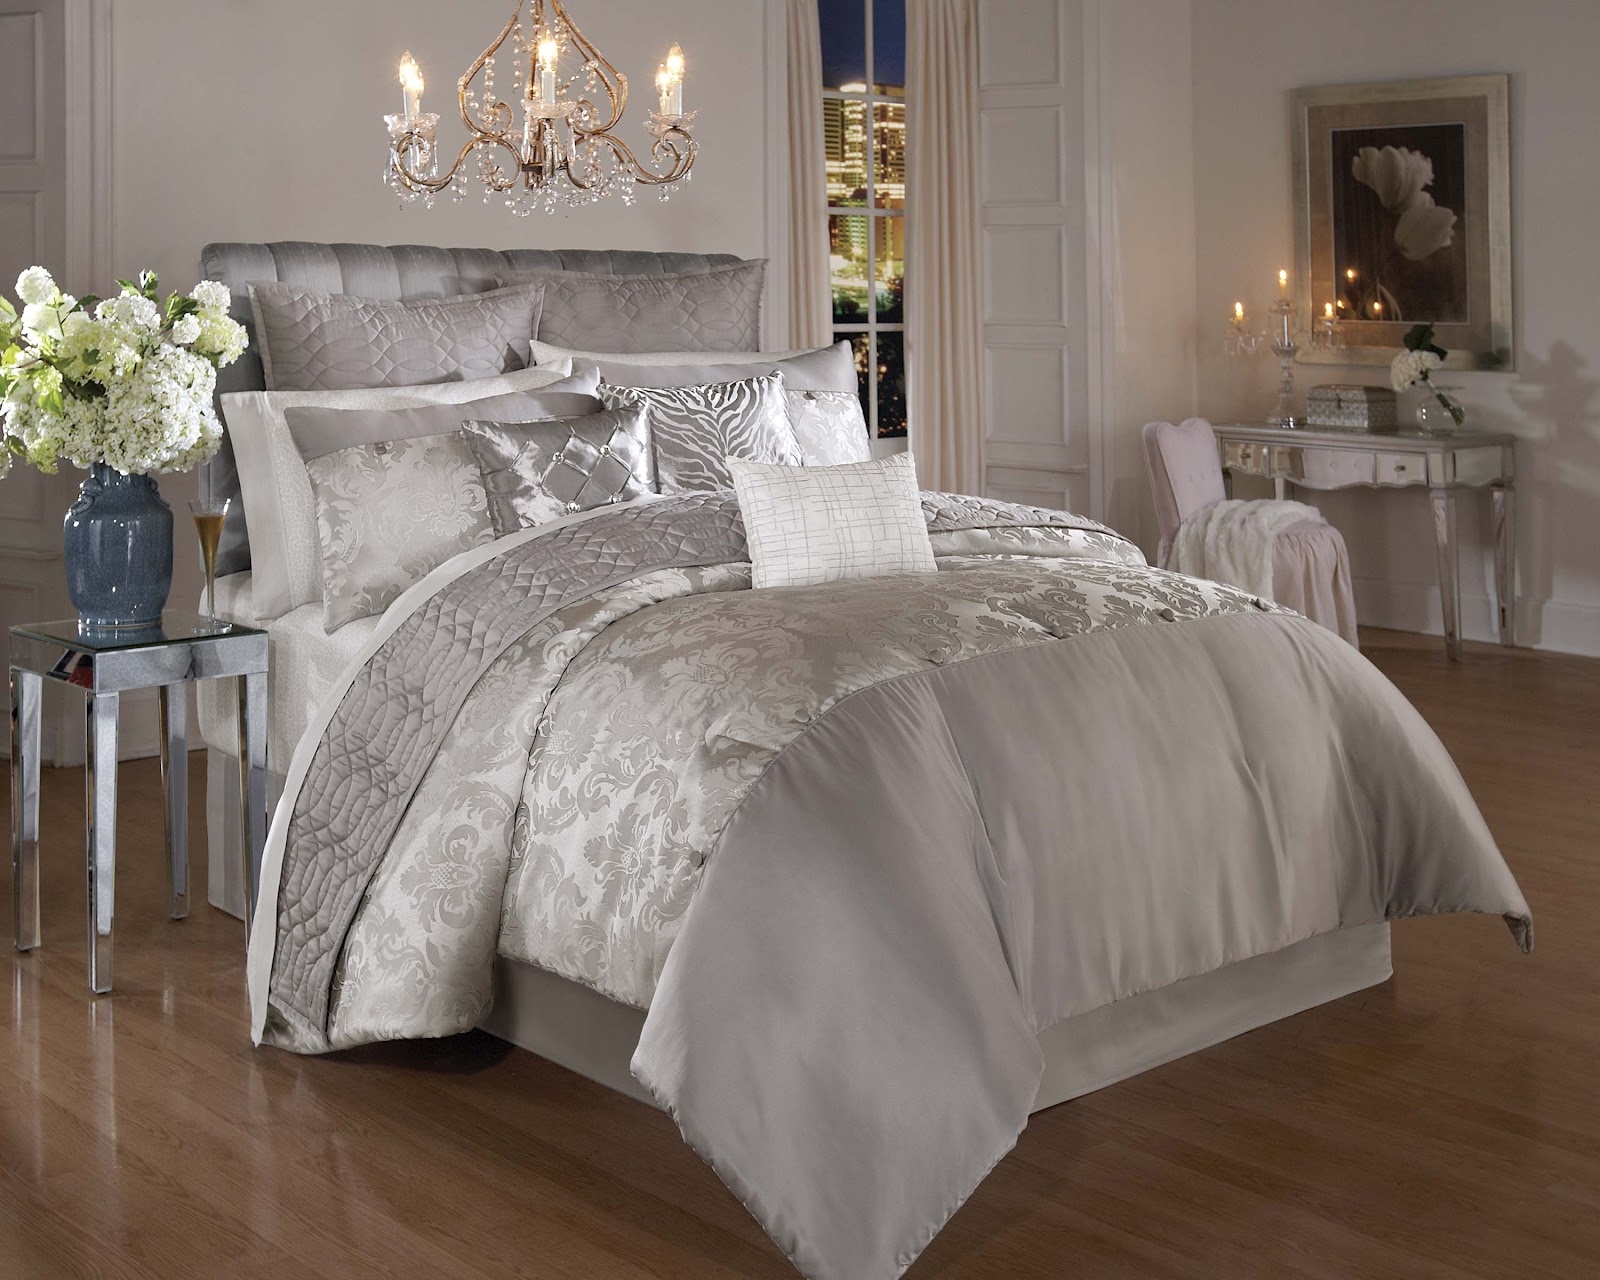 silver bedroom furniture decoe ideas